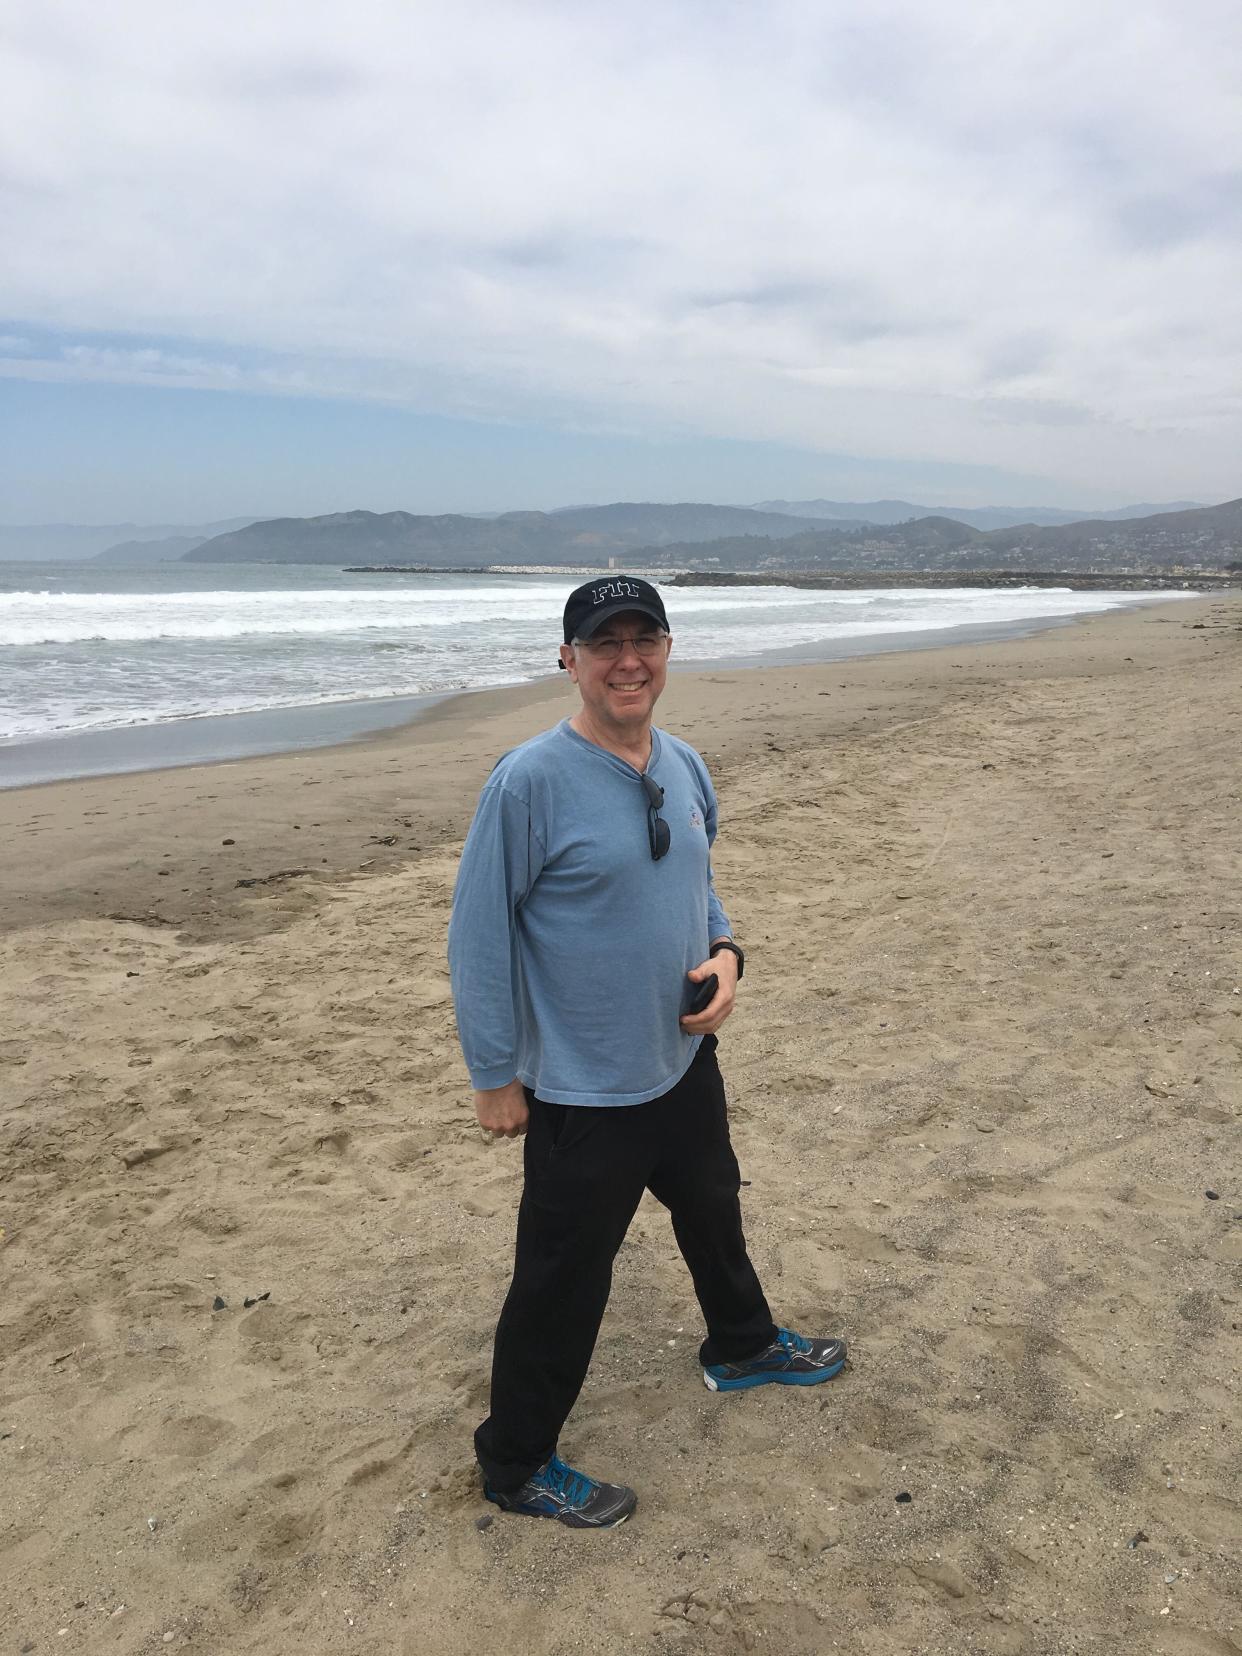 Mark Oliver enjoying a beach day in California in spring 2017.